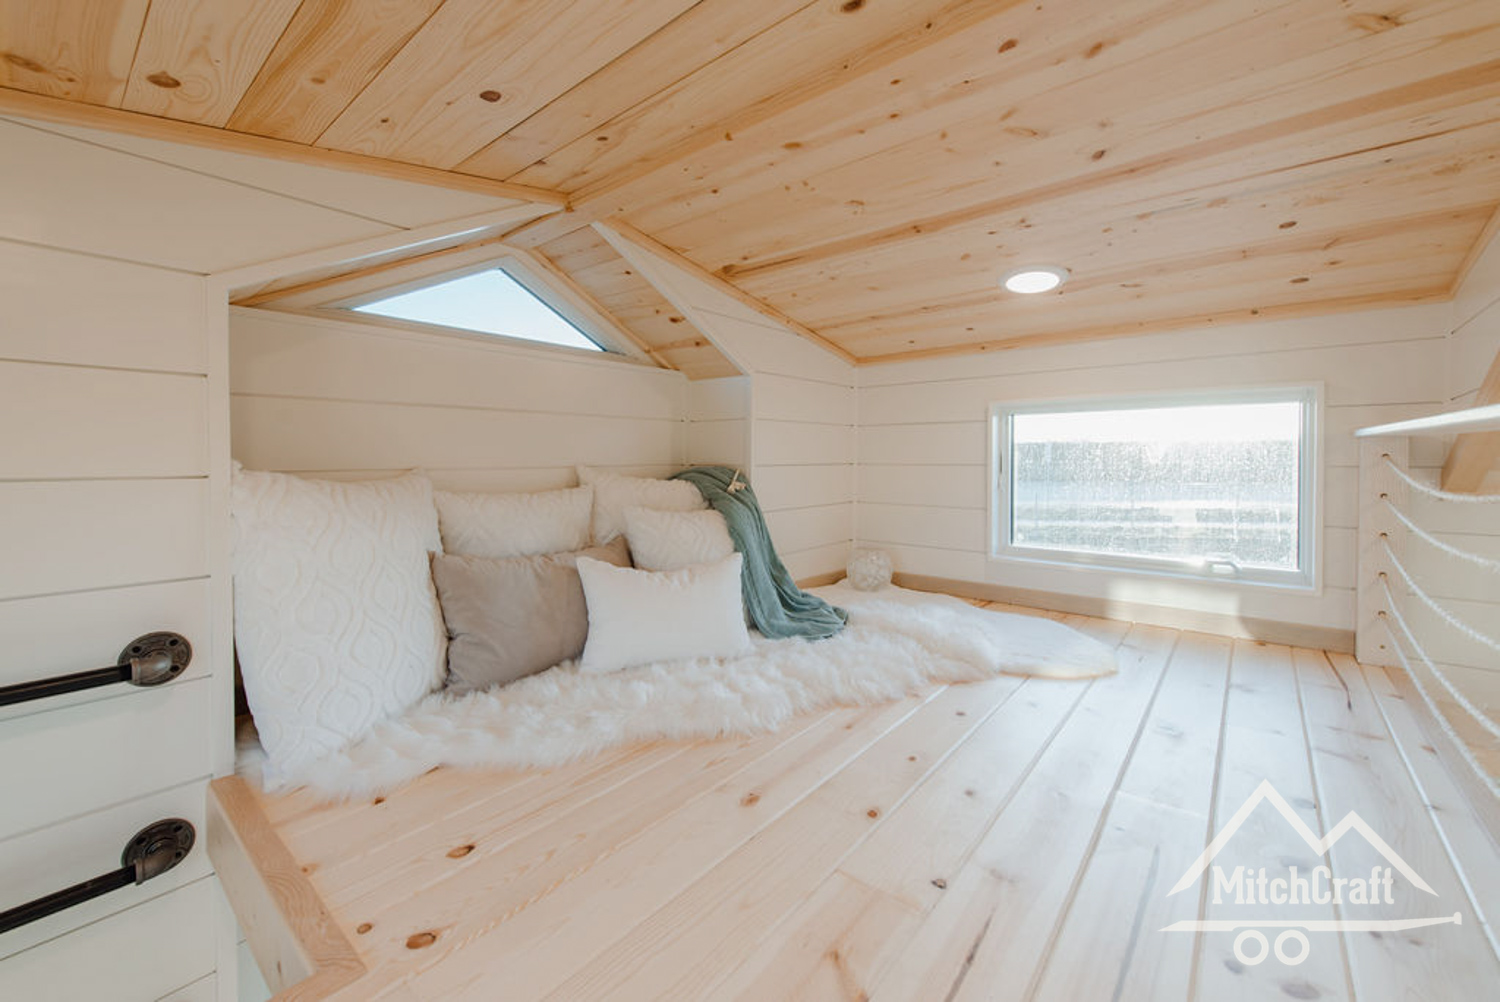 Bedroom Loft w/ Ladder - Kay’s Tiny House by MitchCraft Tiny Homes